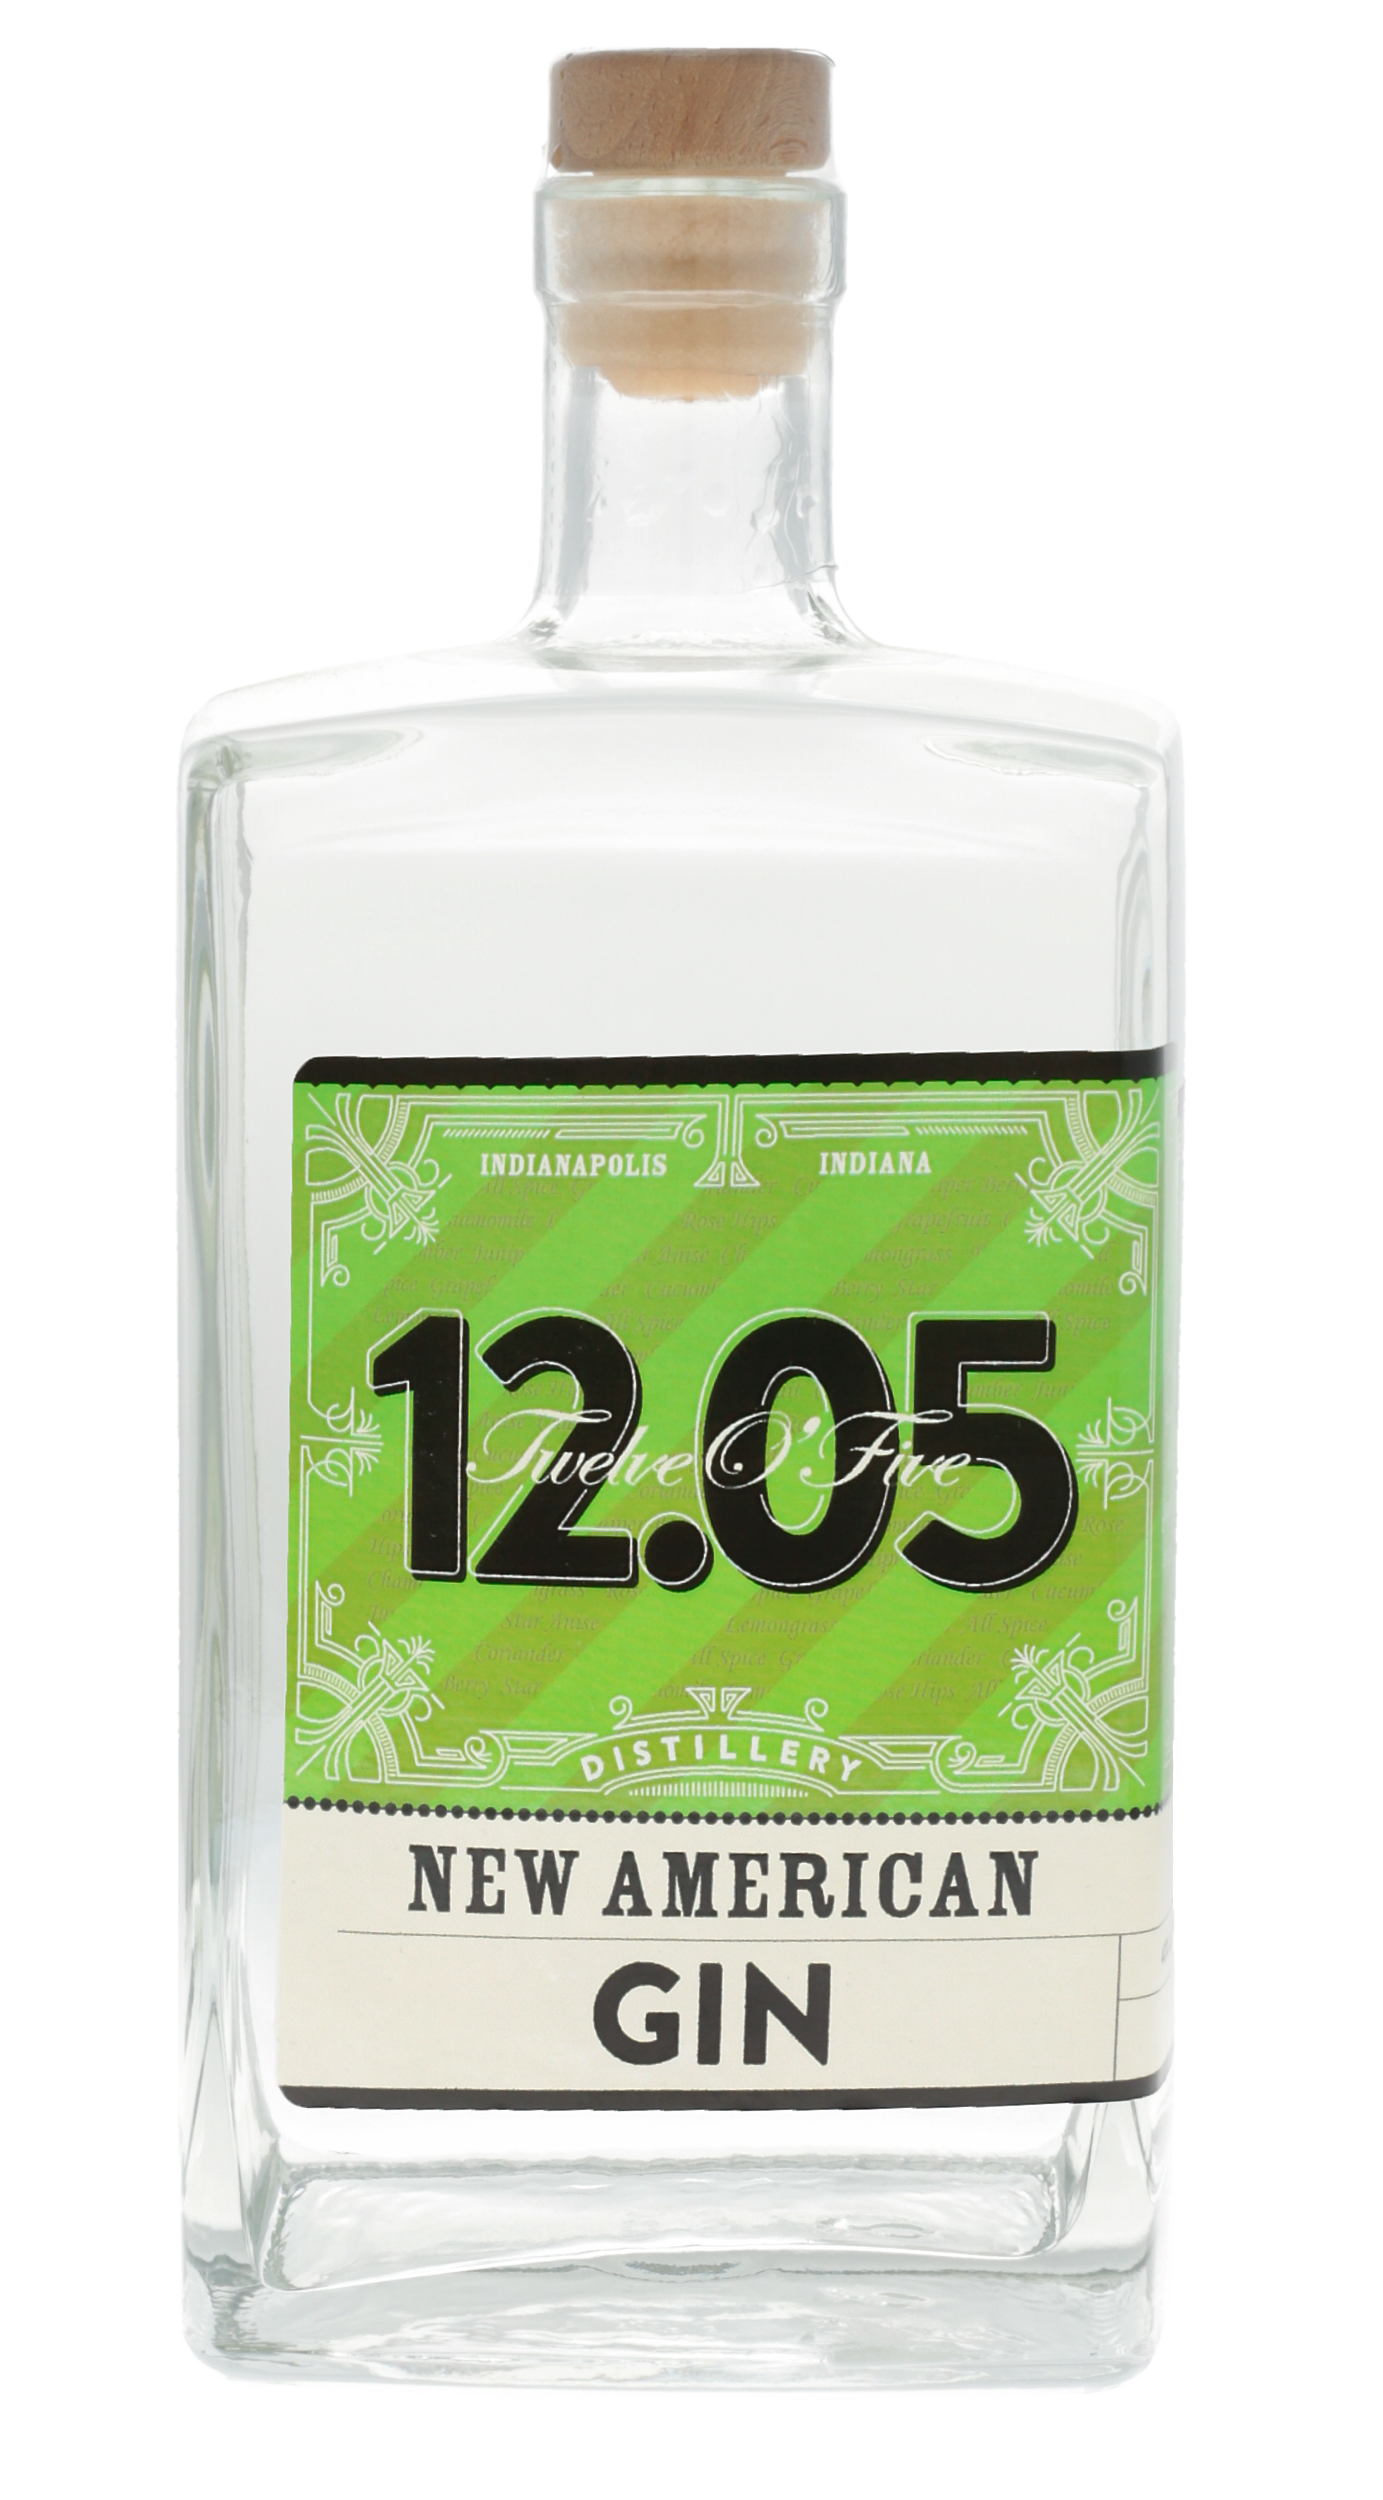 1205 New American Gin